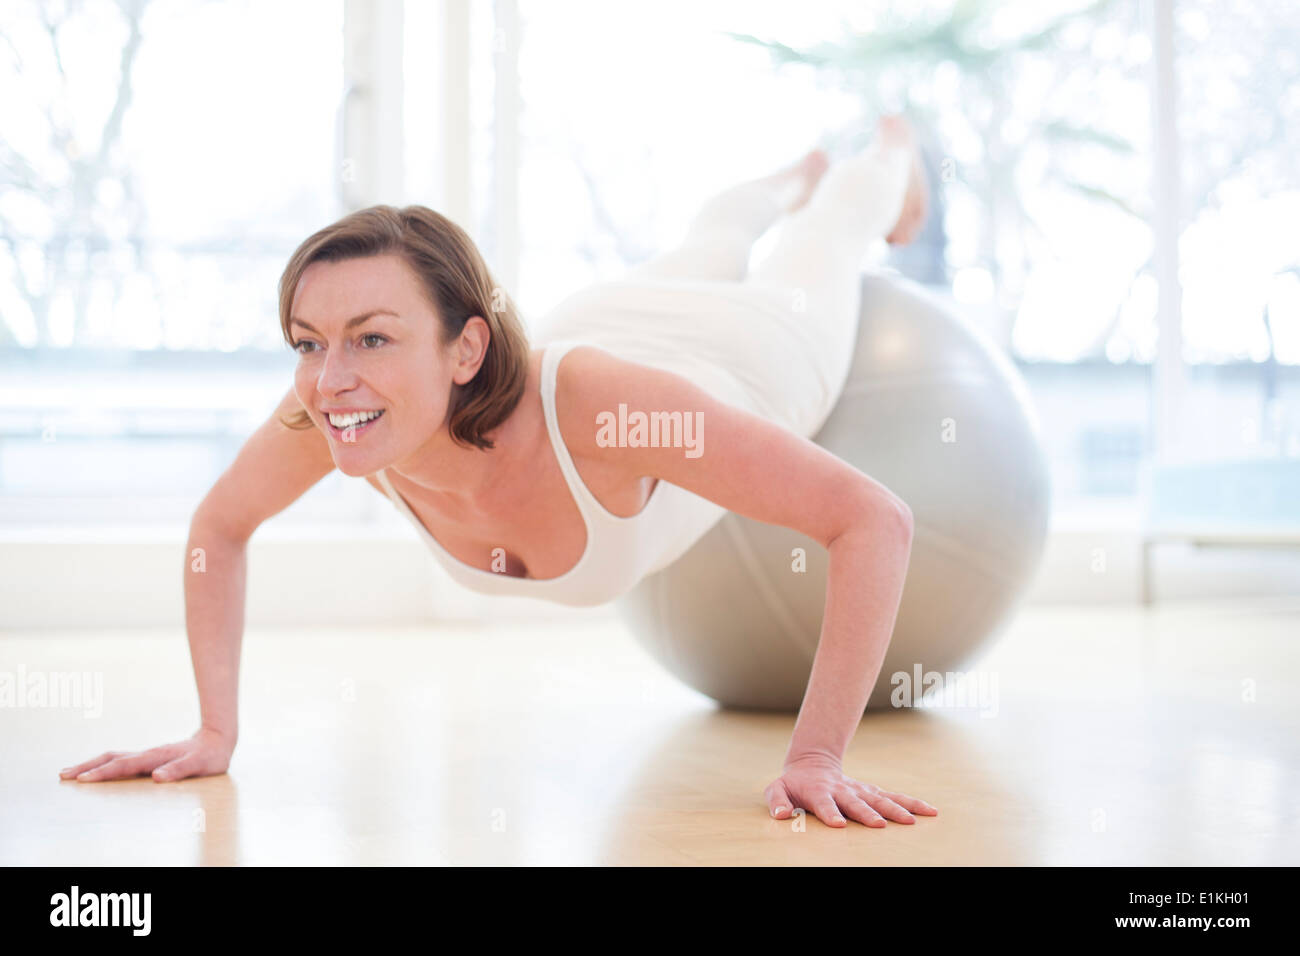 MODEL Release Frau balancieren auf einem Gymnastikball. Stockfoto